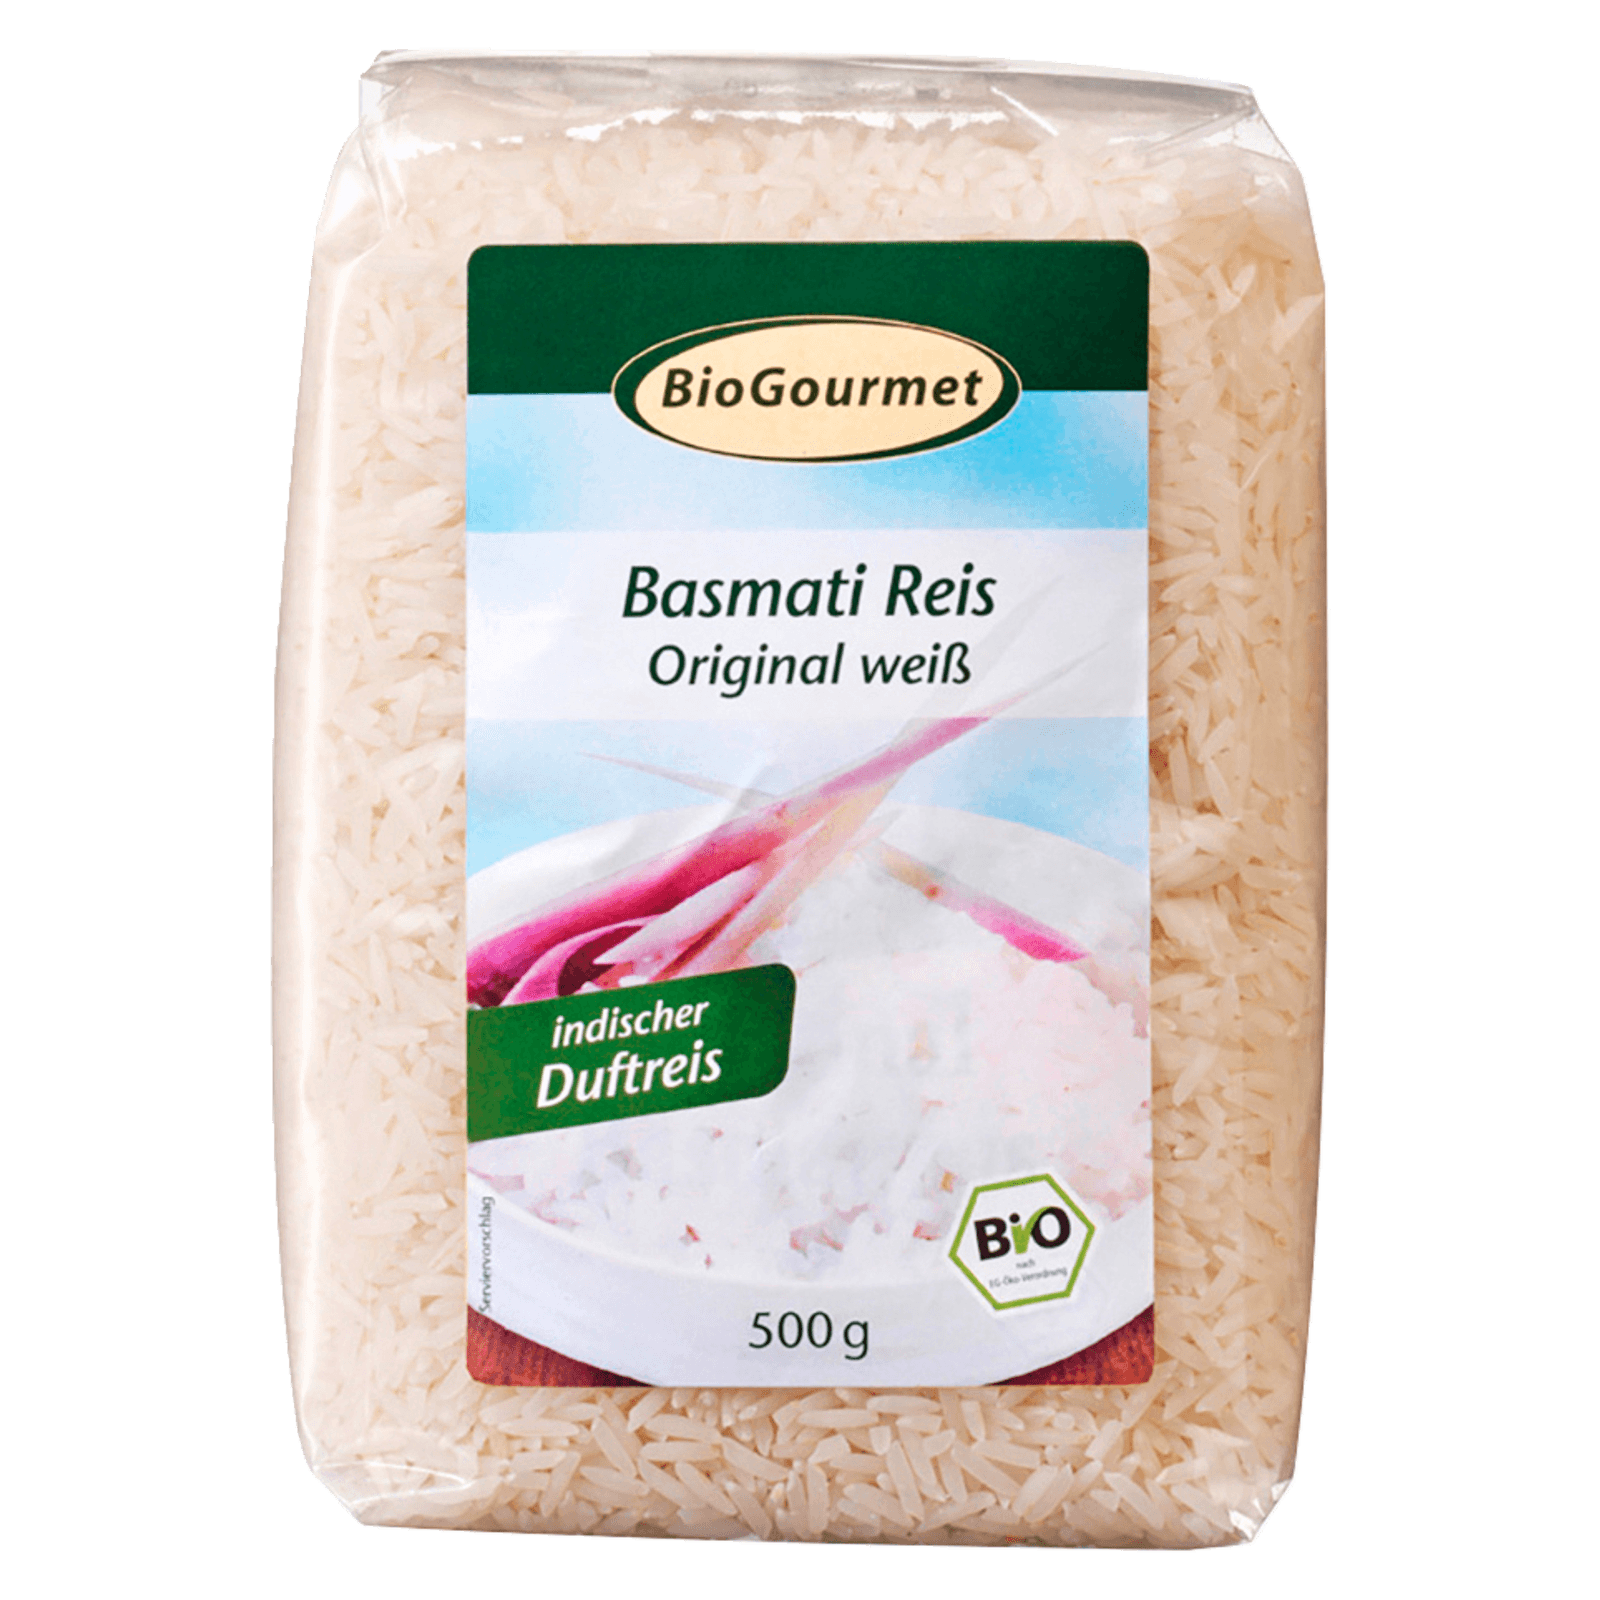 BioGourmet Bio Original Basmati-Reis 500g  für 4.19 EUR